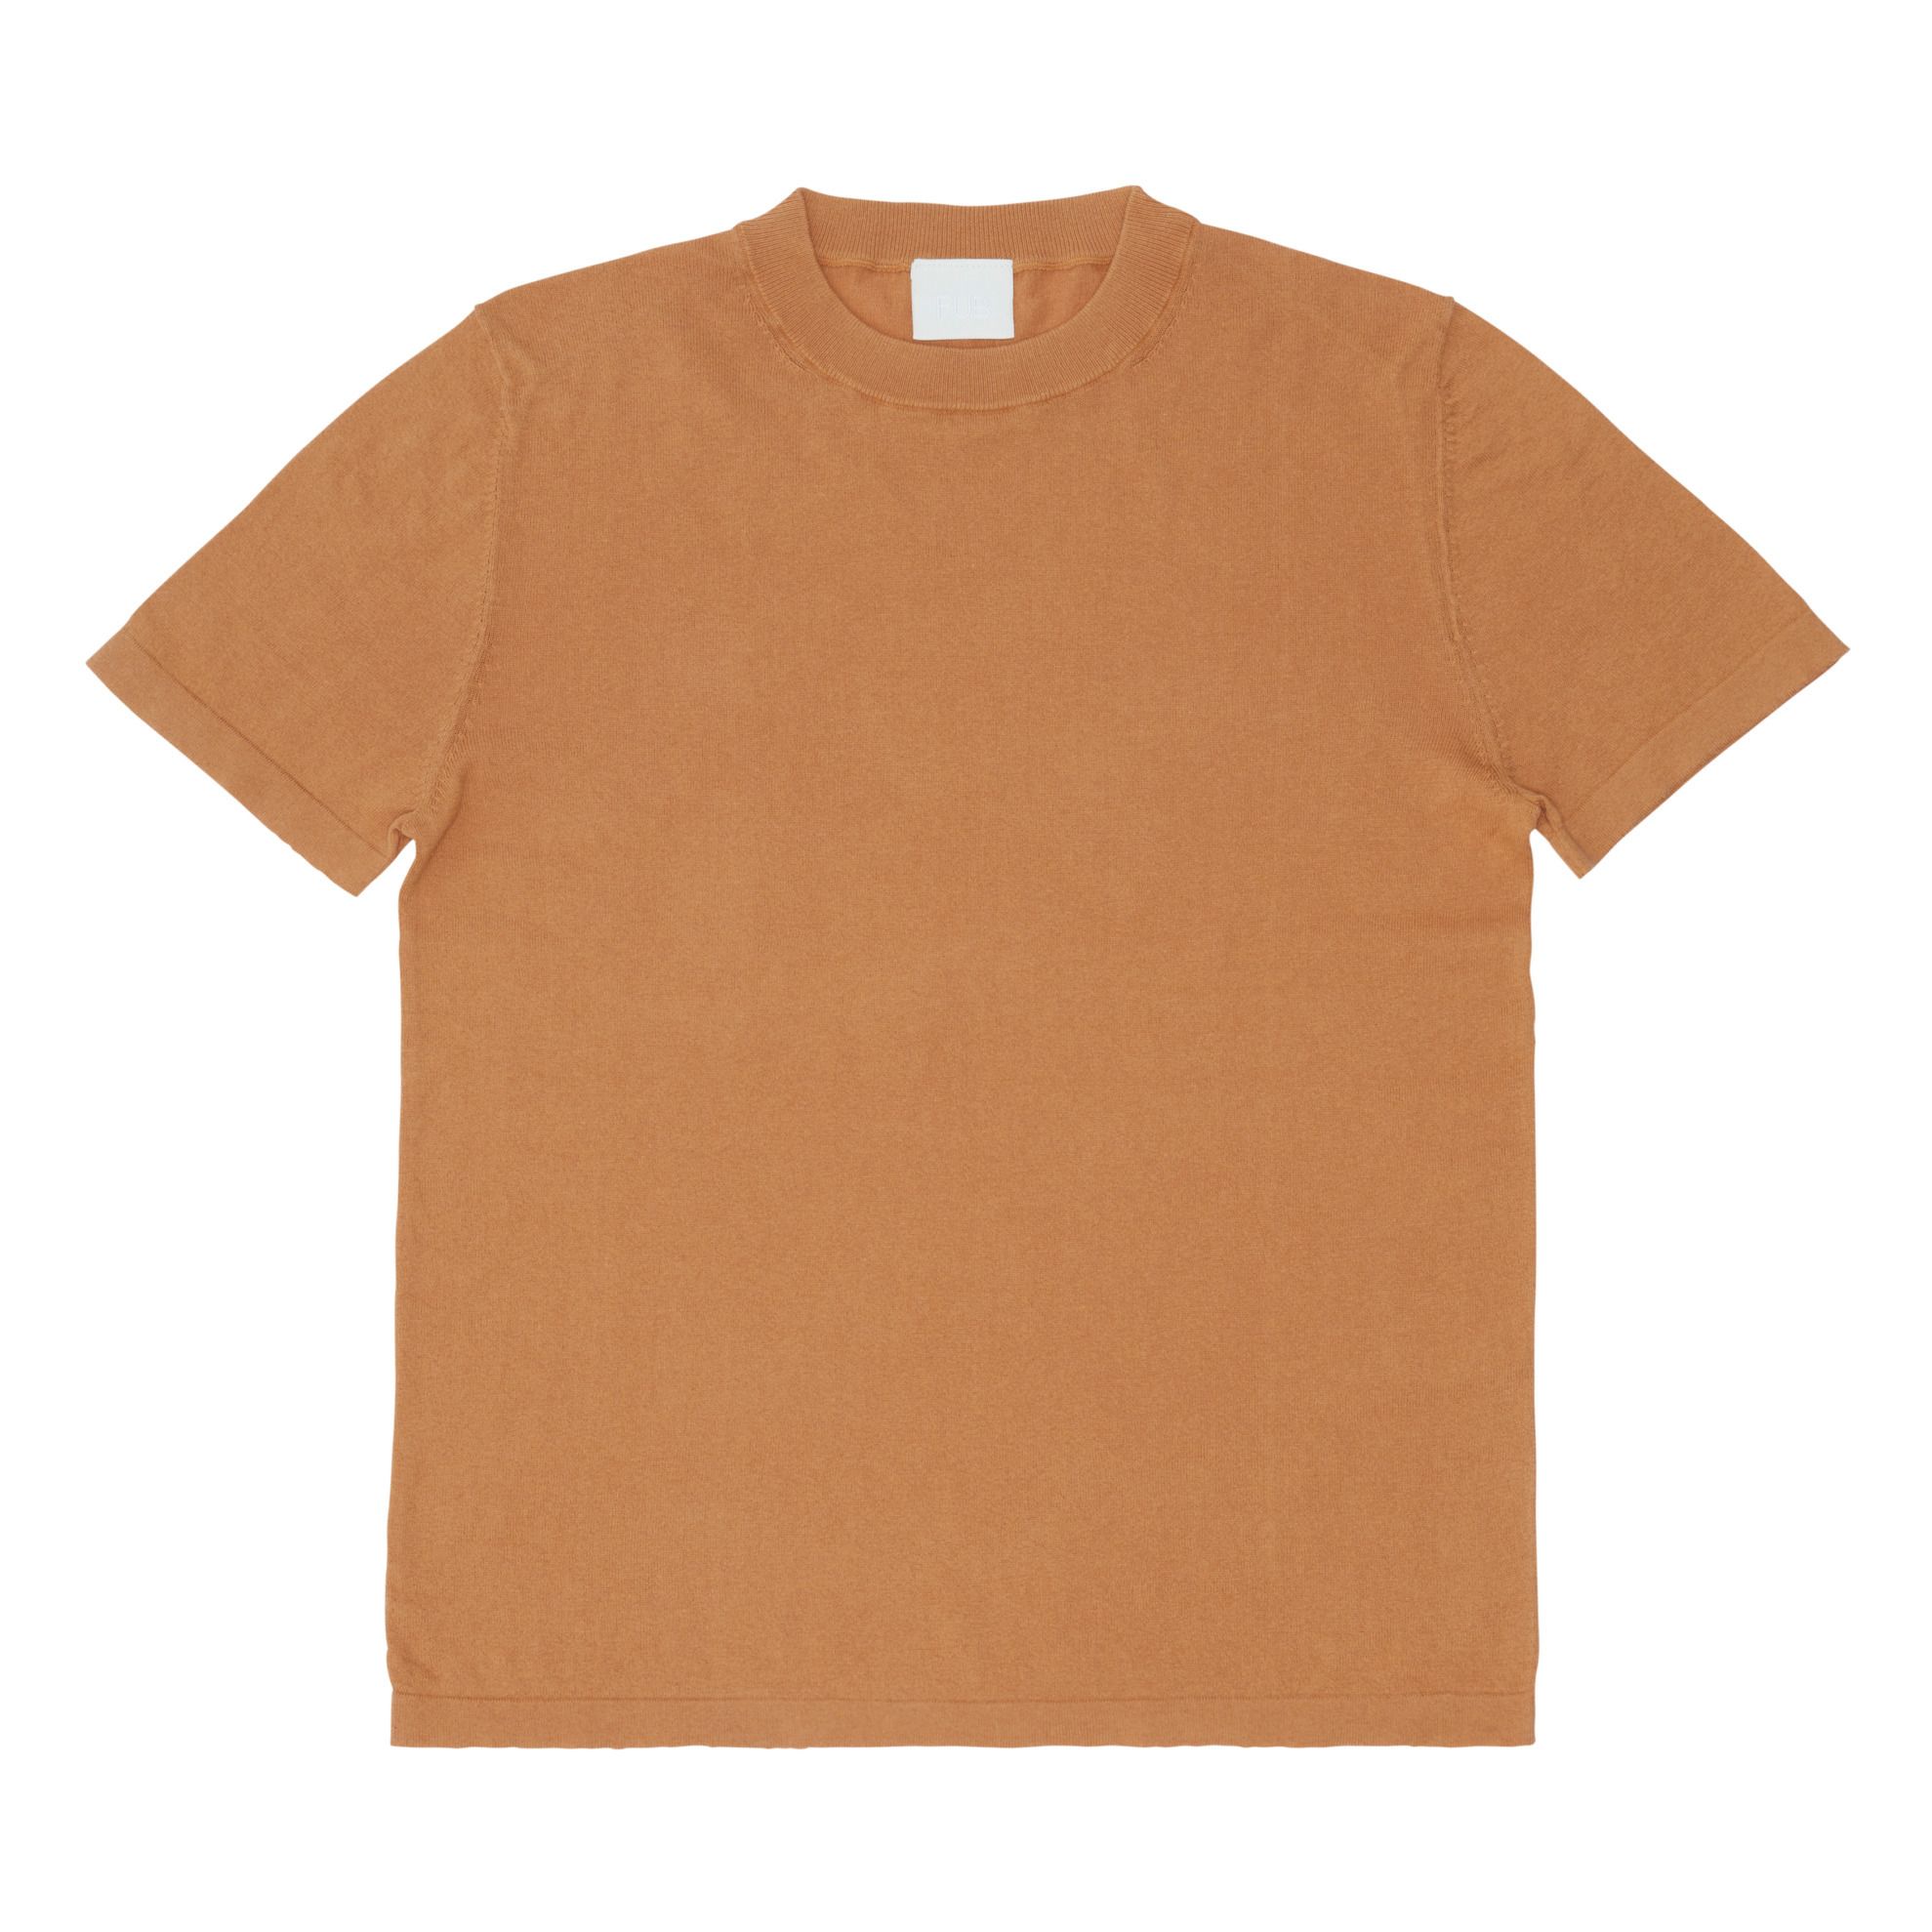 FUB - T-shirt Coton Bio - Femme - Abricot